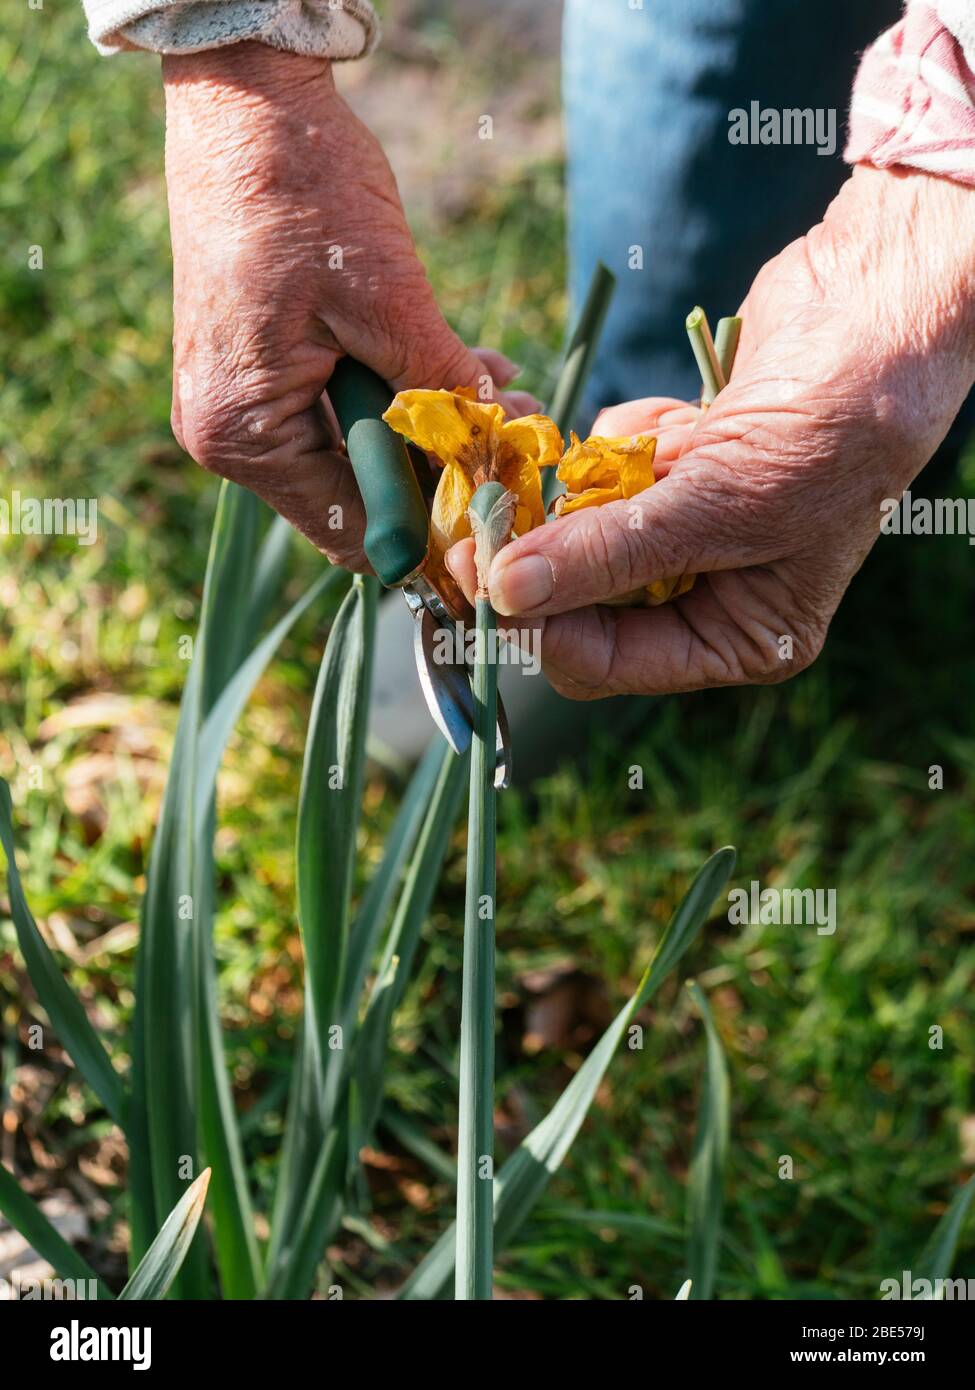 Gardener deadheading daffodils with secateurs. Stock Photo